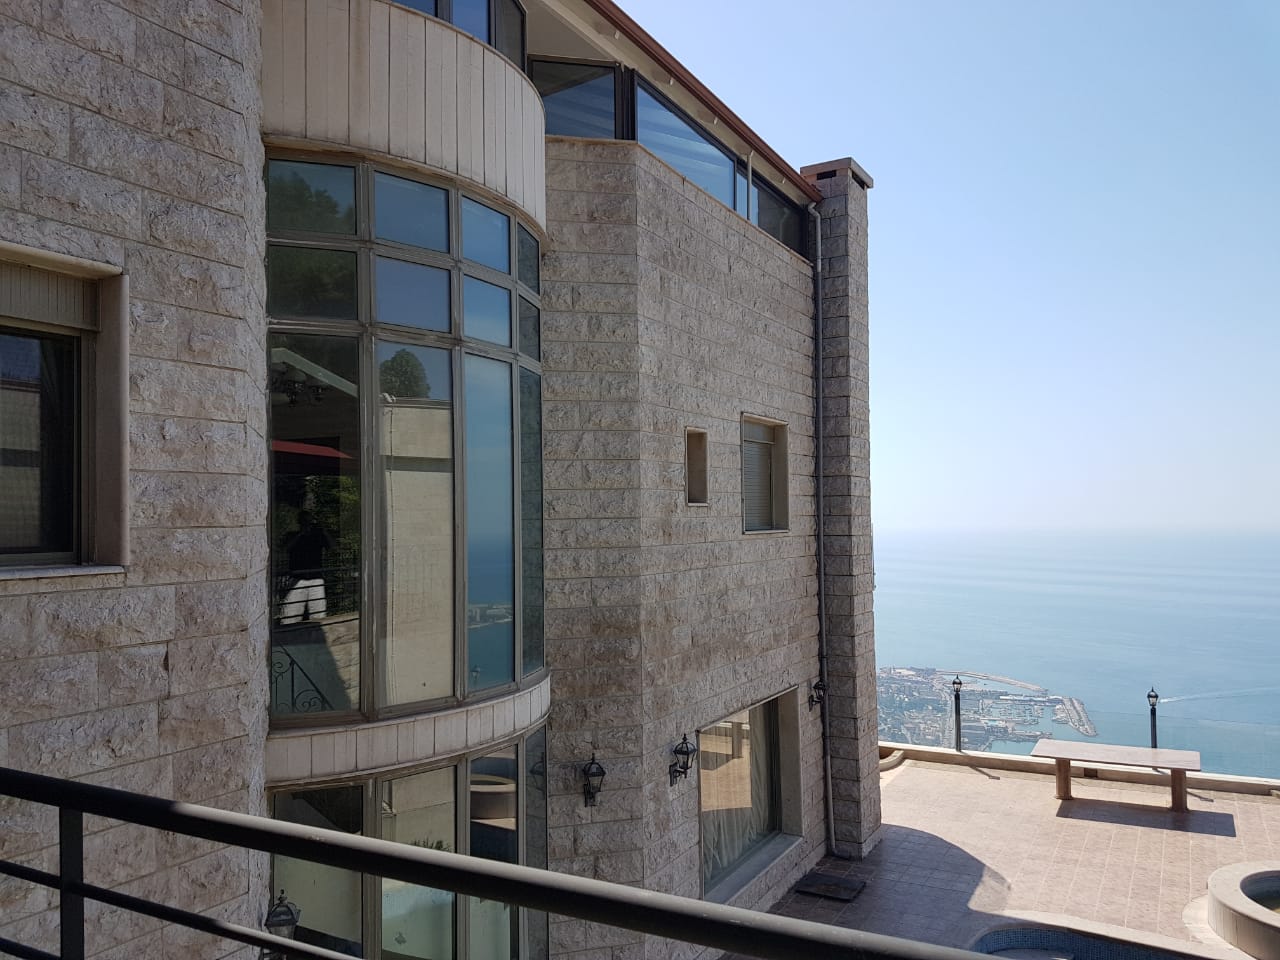 A beautiful villa for sale in harissa, Keserwan Lebanon, real estate in jounieh Lebanon, buy sell properties in jounieh harissa lebanon